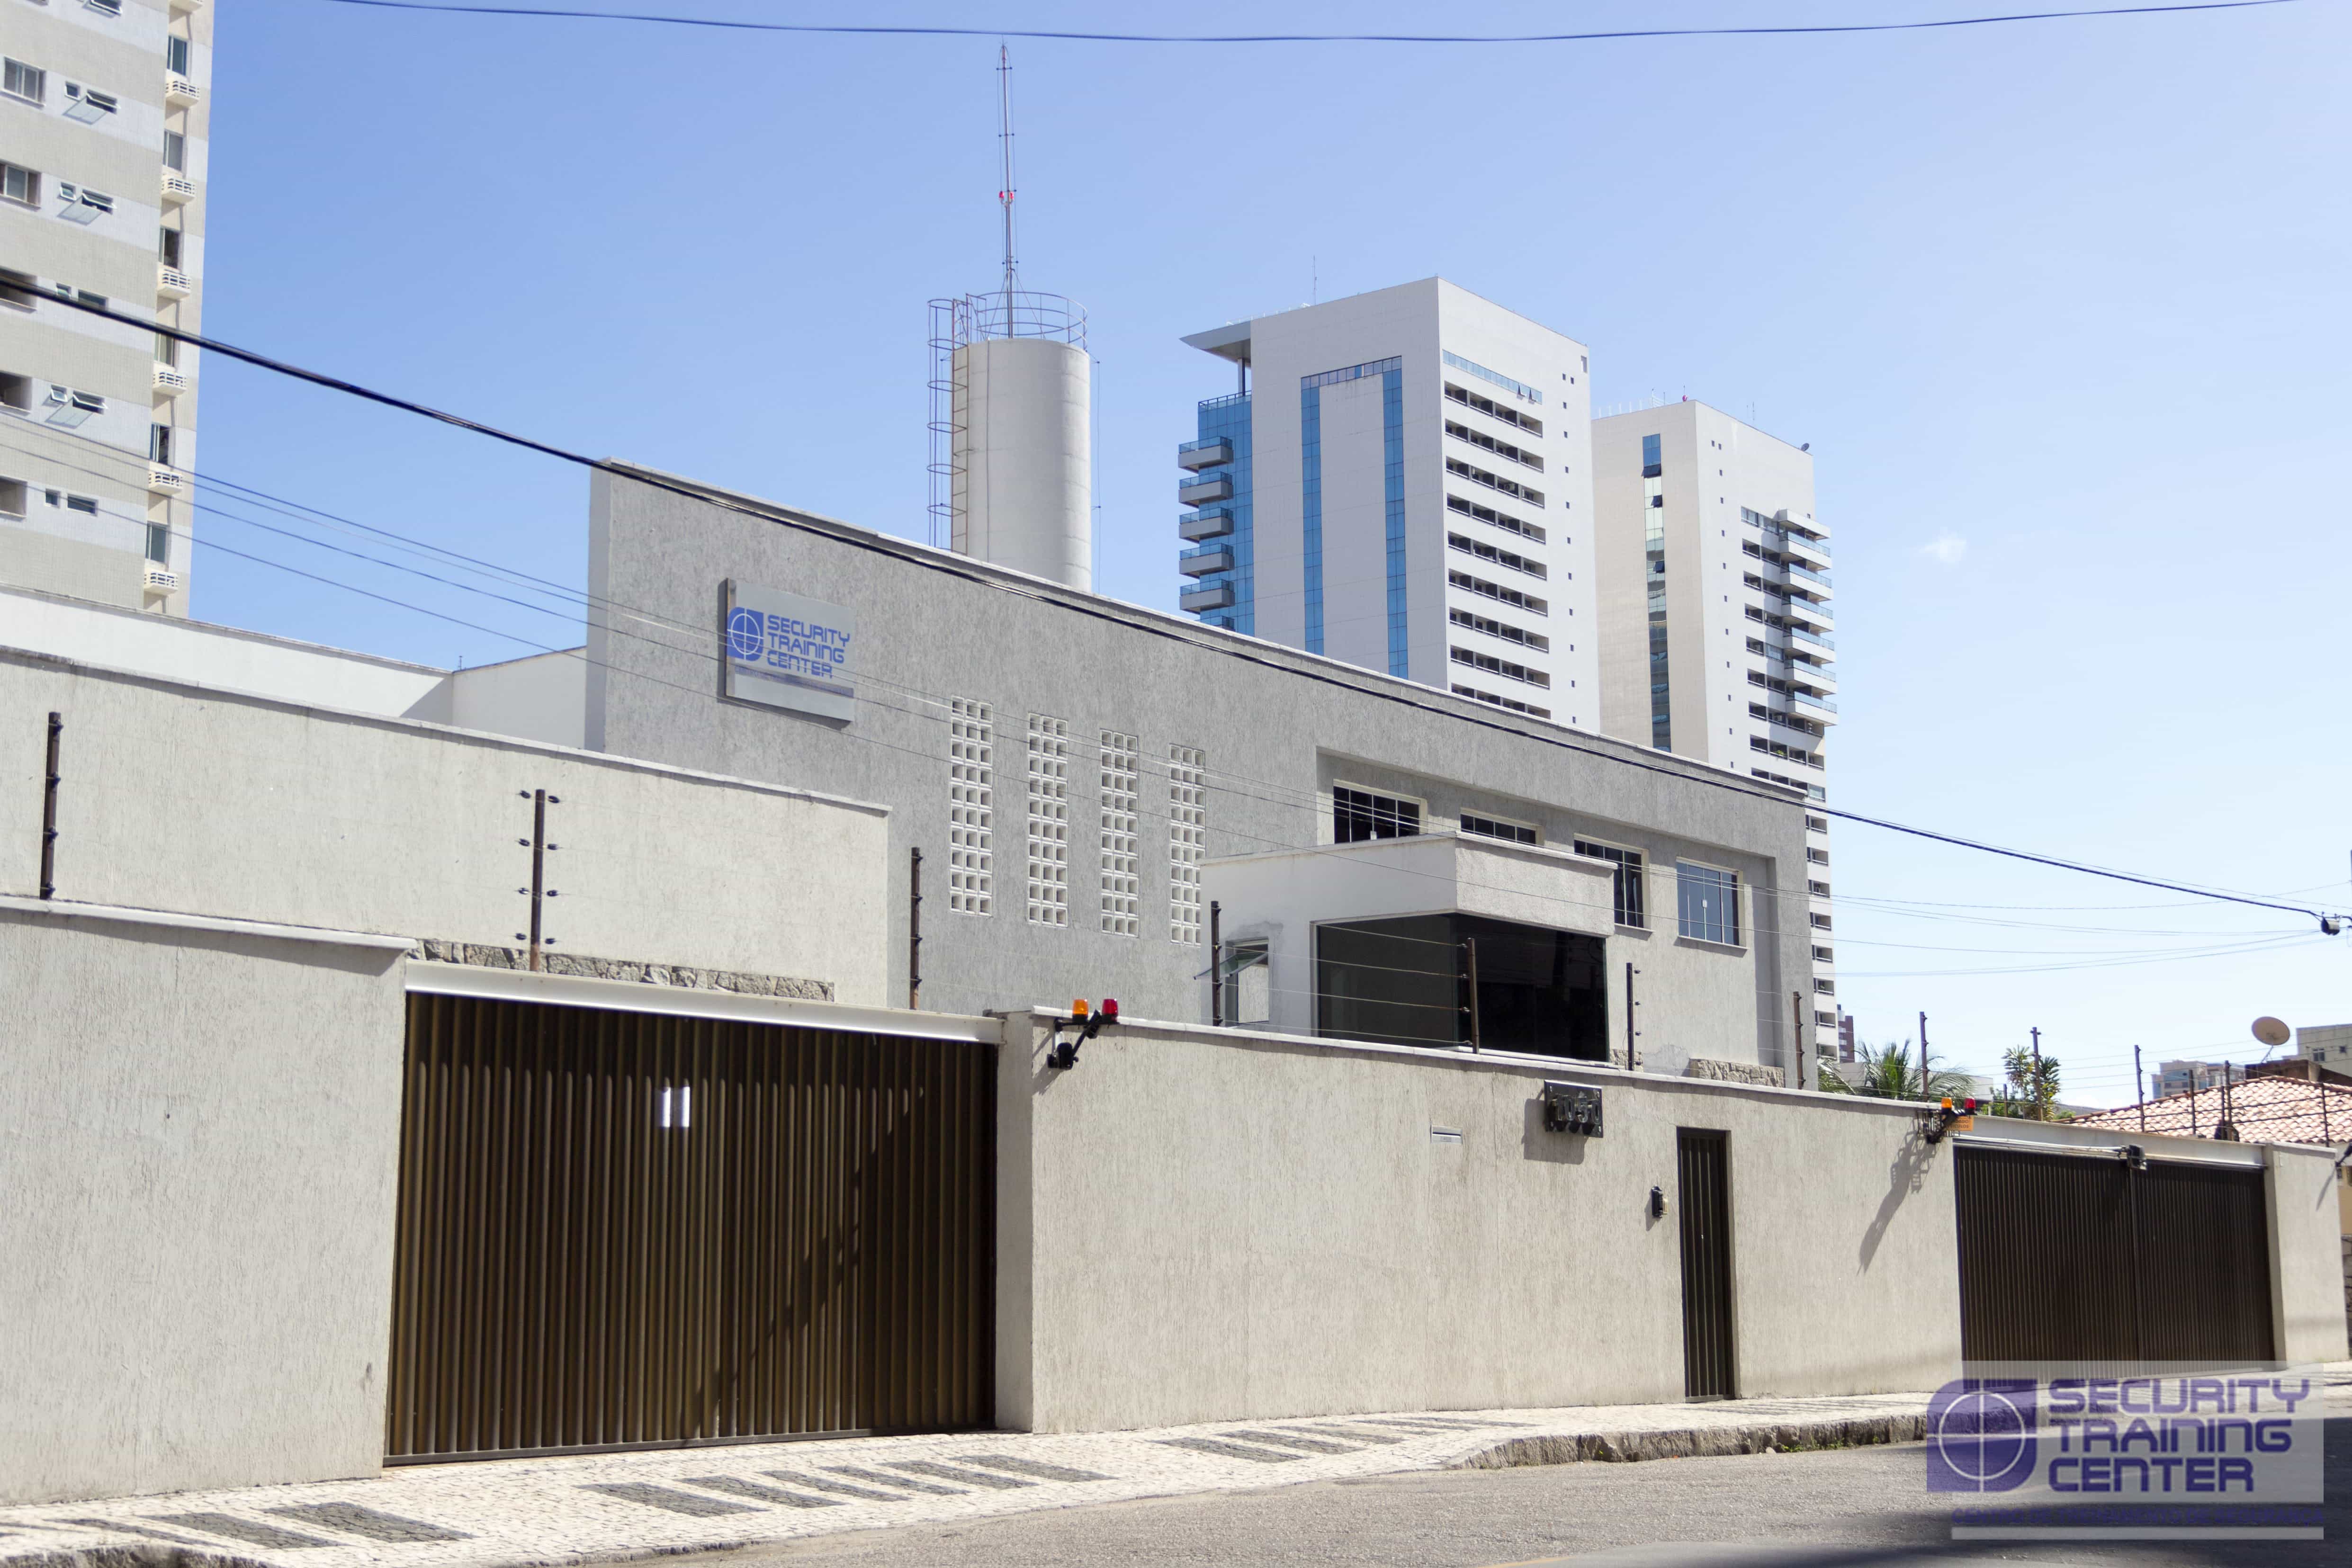 Security Training Center - Rua Pereira de Miranda, 1050 - Papicu | Fortaleza-CE.